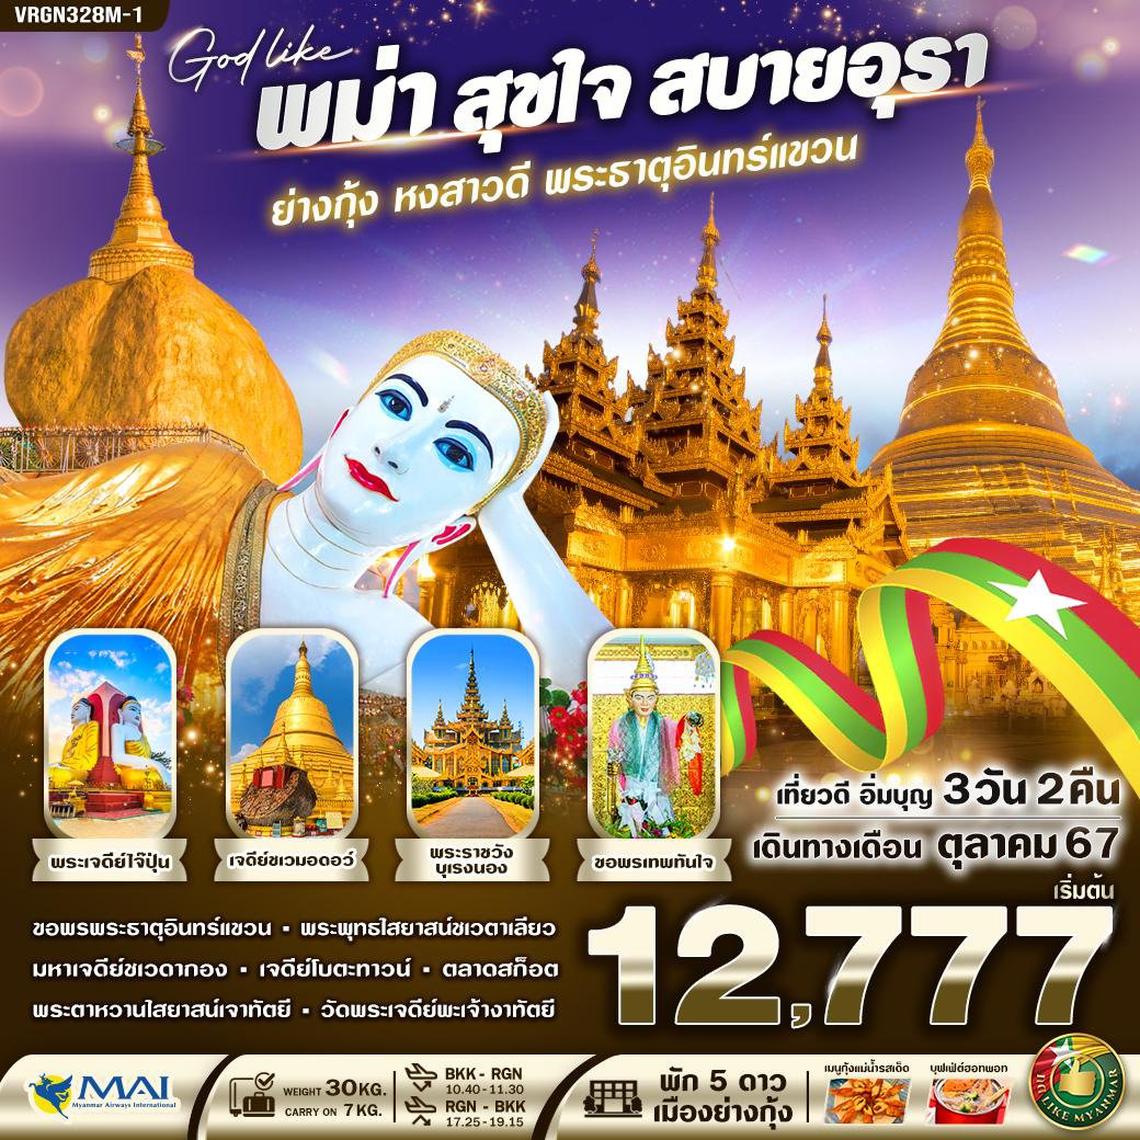 VRGN328M-1 MYANMAR สุขใจ สบายอุรา (ย่างกุ้ง หงสาวดี พระธาตุอินทร์แขวน) 3 วัน 2 คืน BY 8M